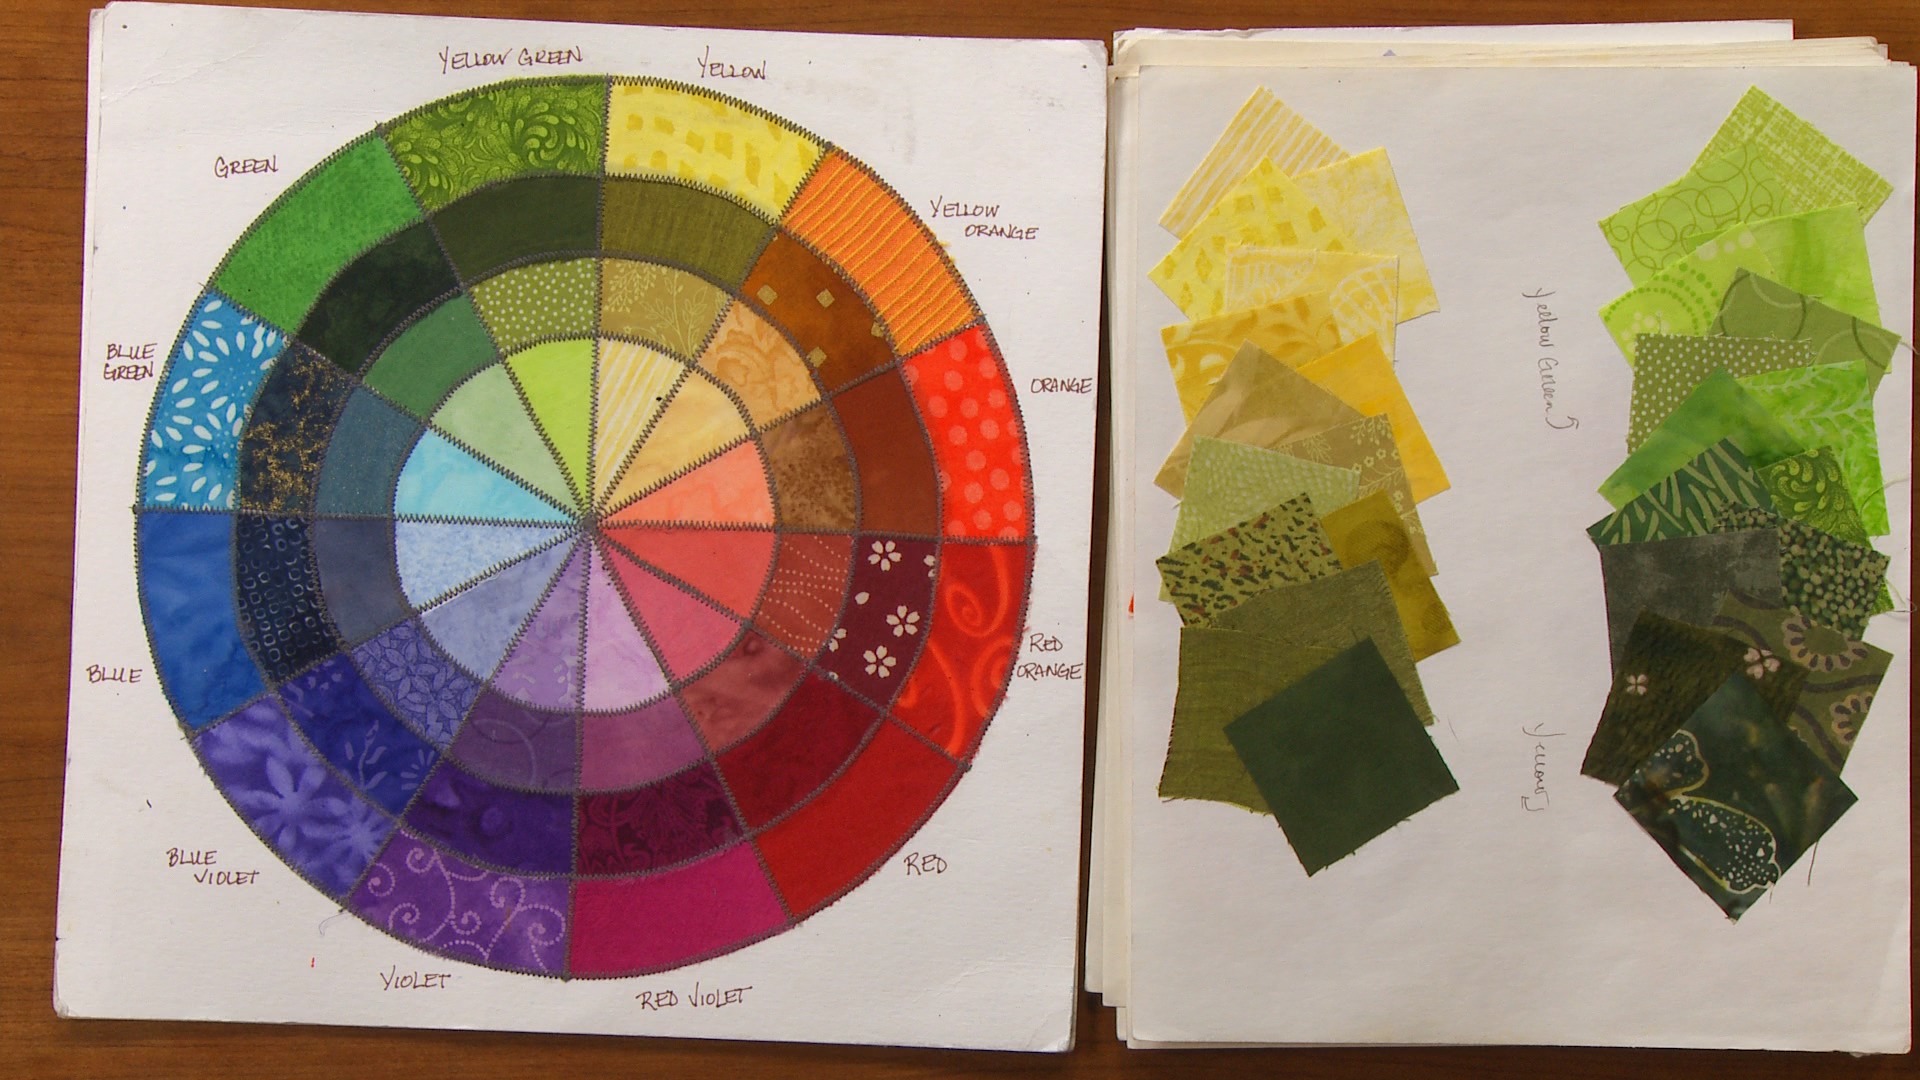 The Color Wheel & Color Scale